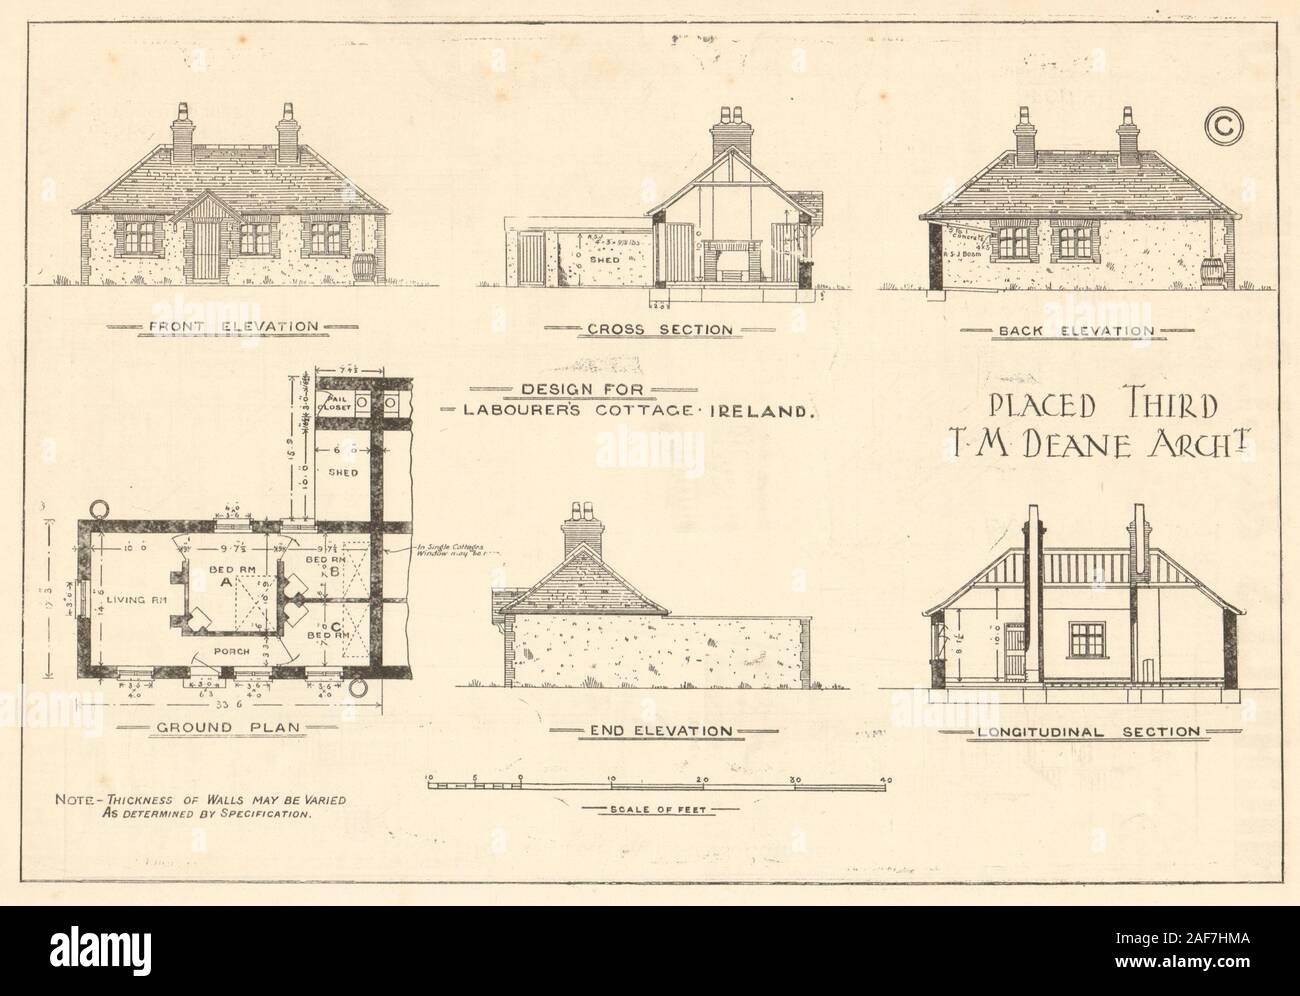 Labourer S Cottage Design Ireland Tm Deane Architect Elevation